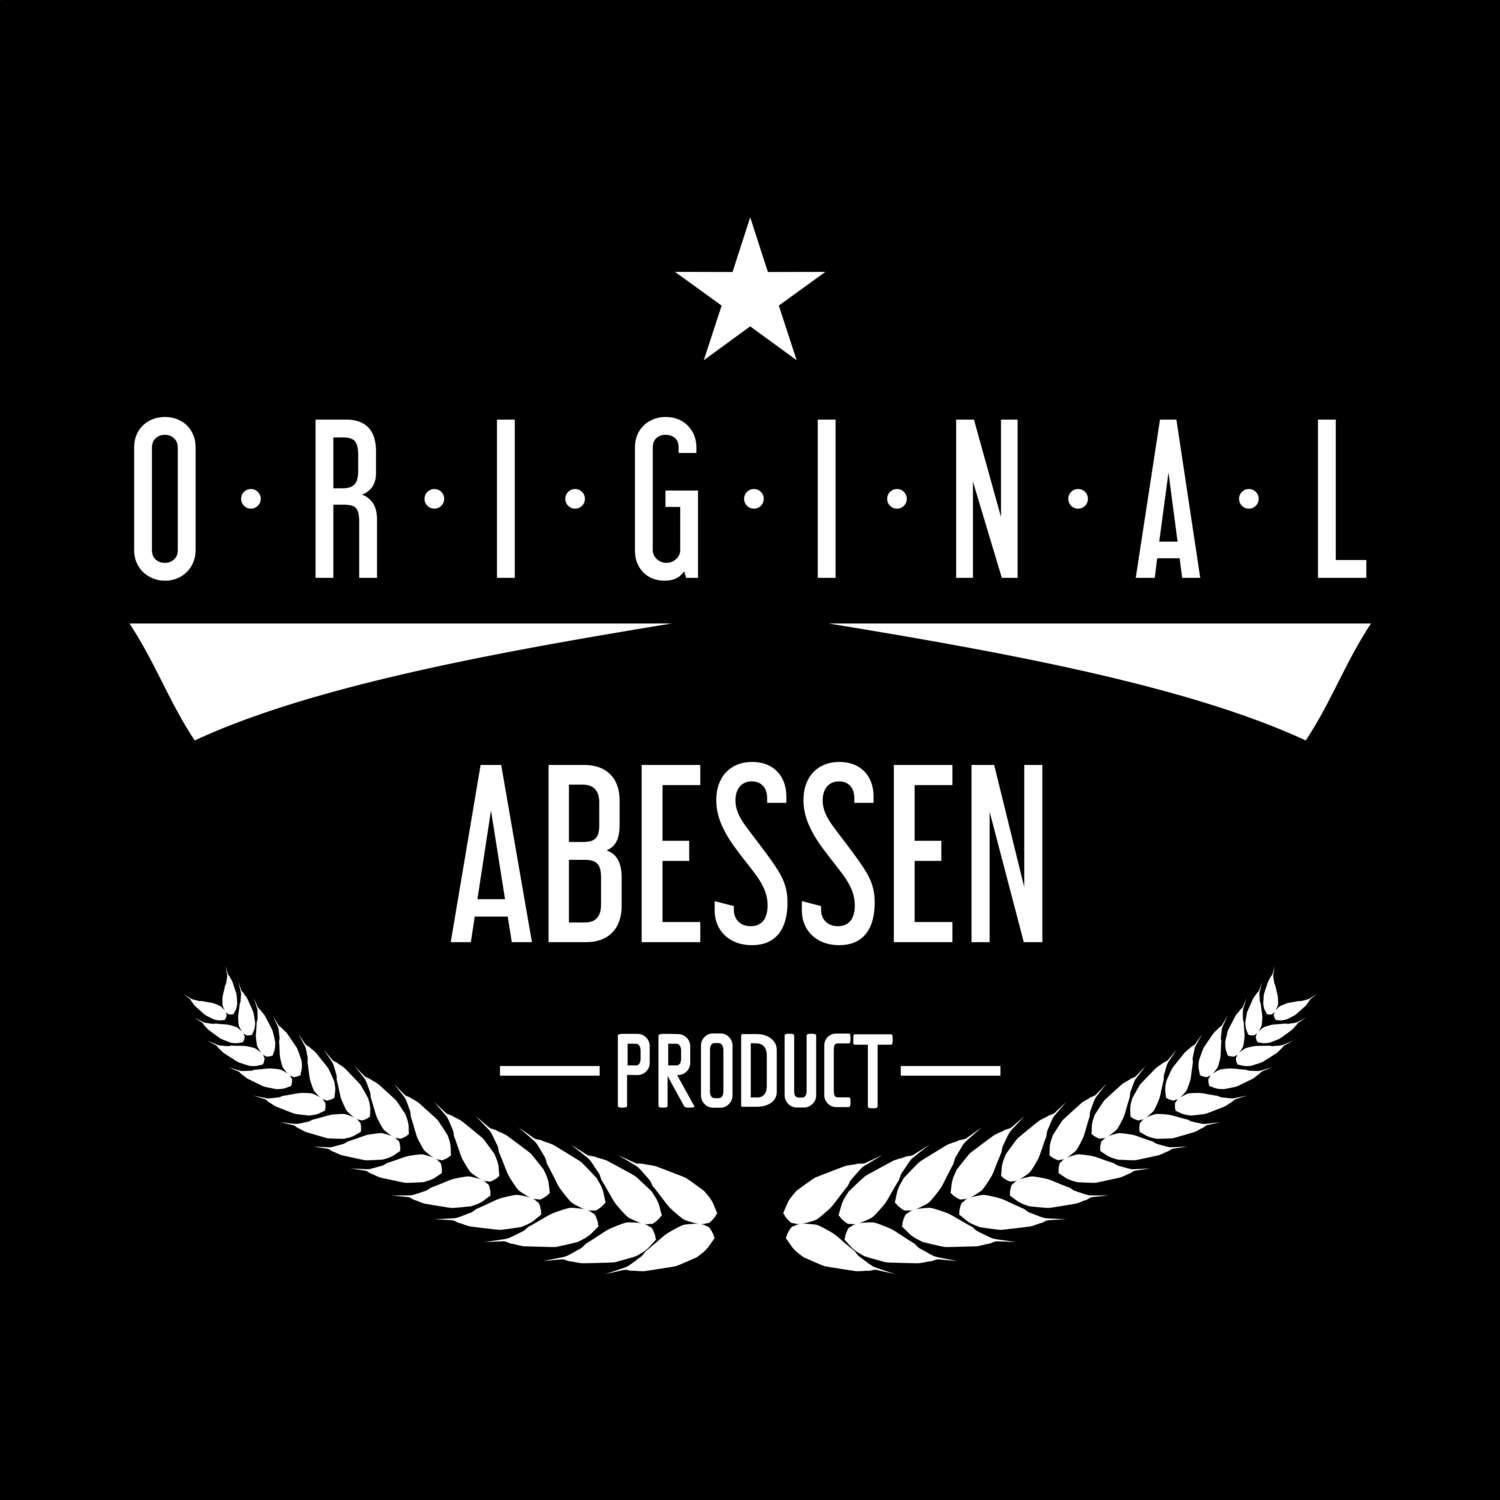 Abessen T-Shirt »Original Product«